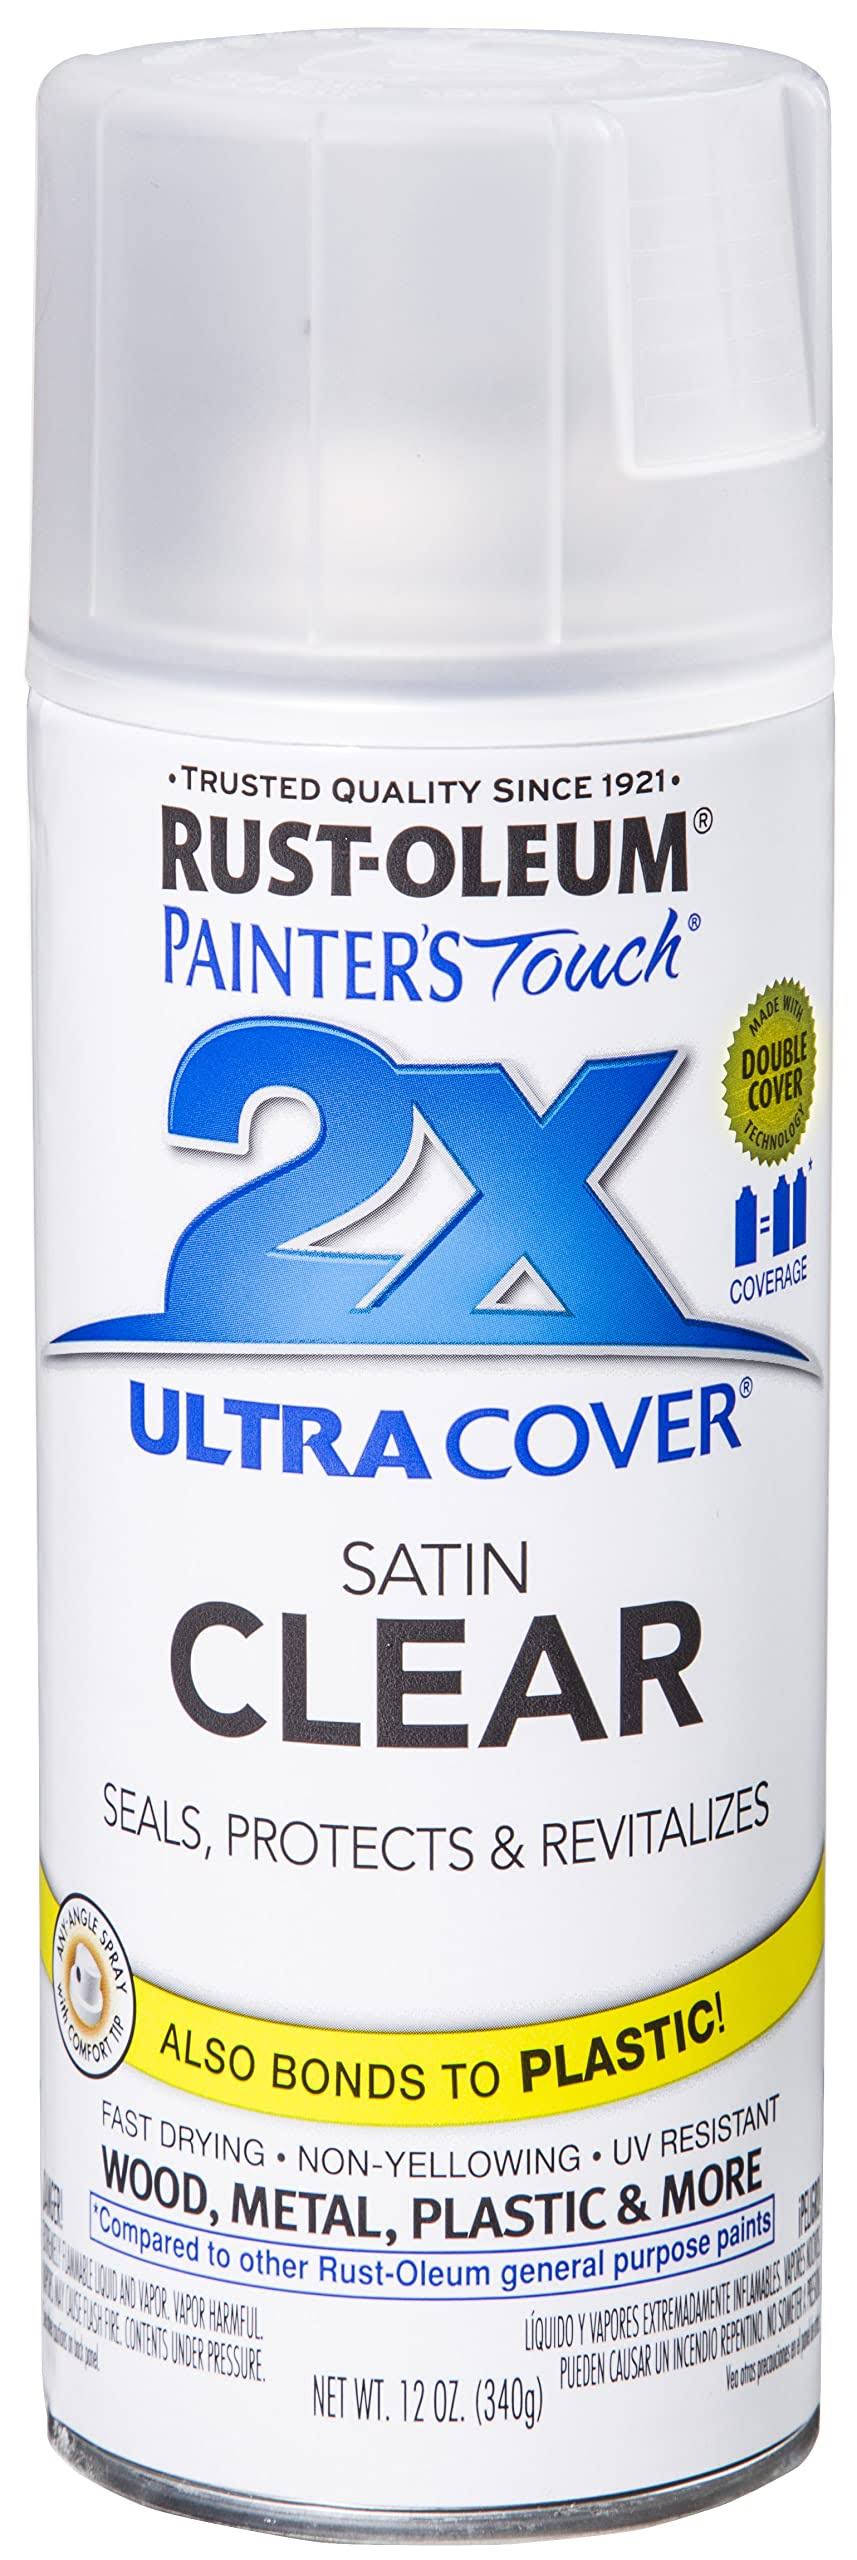 Rust-Oleum Painter's Touch Spray Paint - Satin Clear